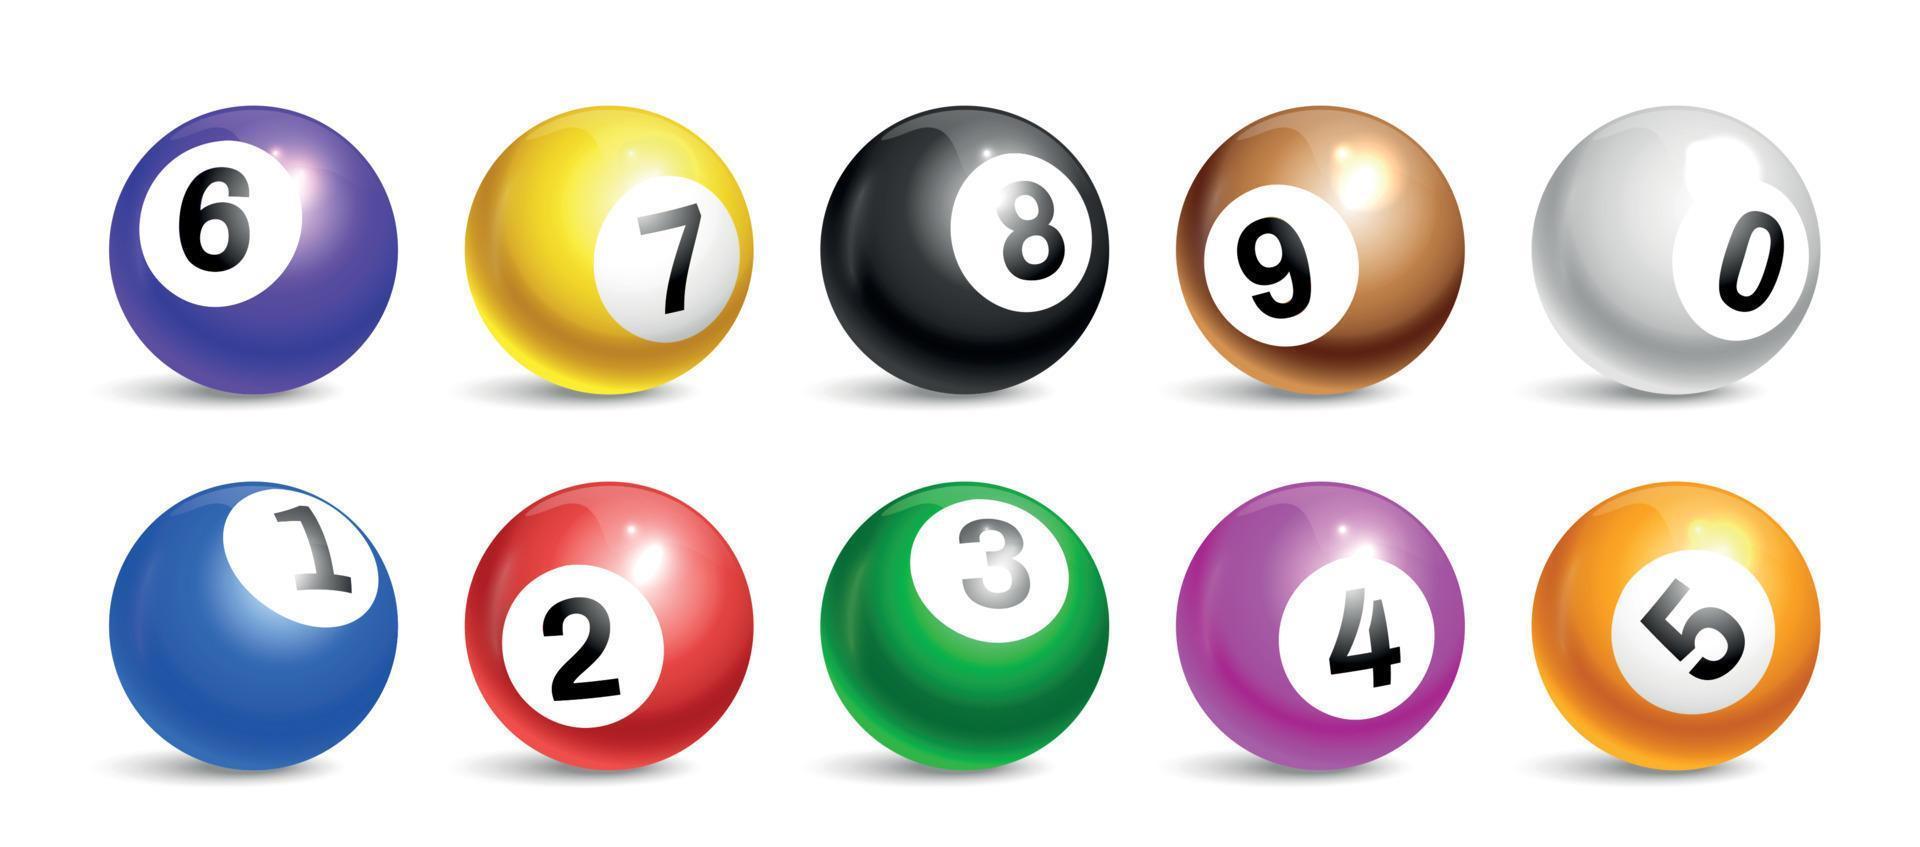 Realistic Bingo Lotto Balls Icon Set vector